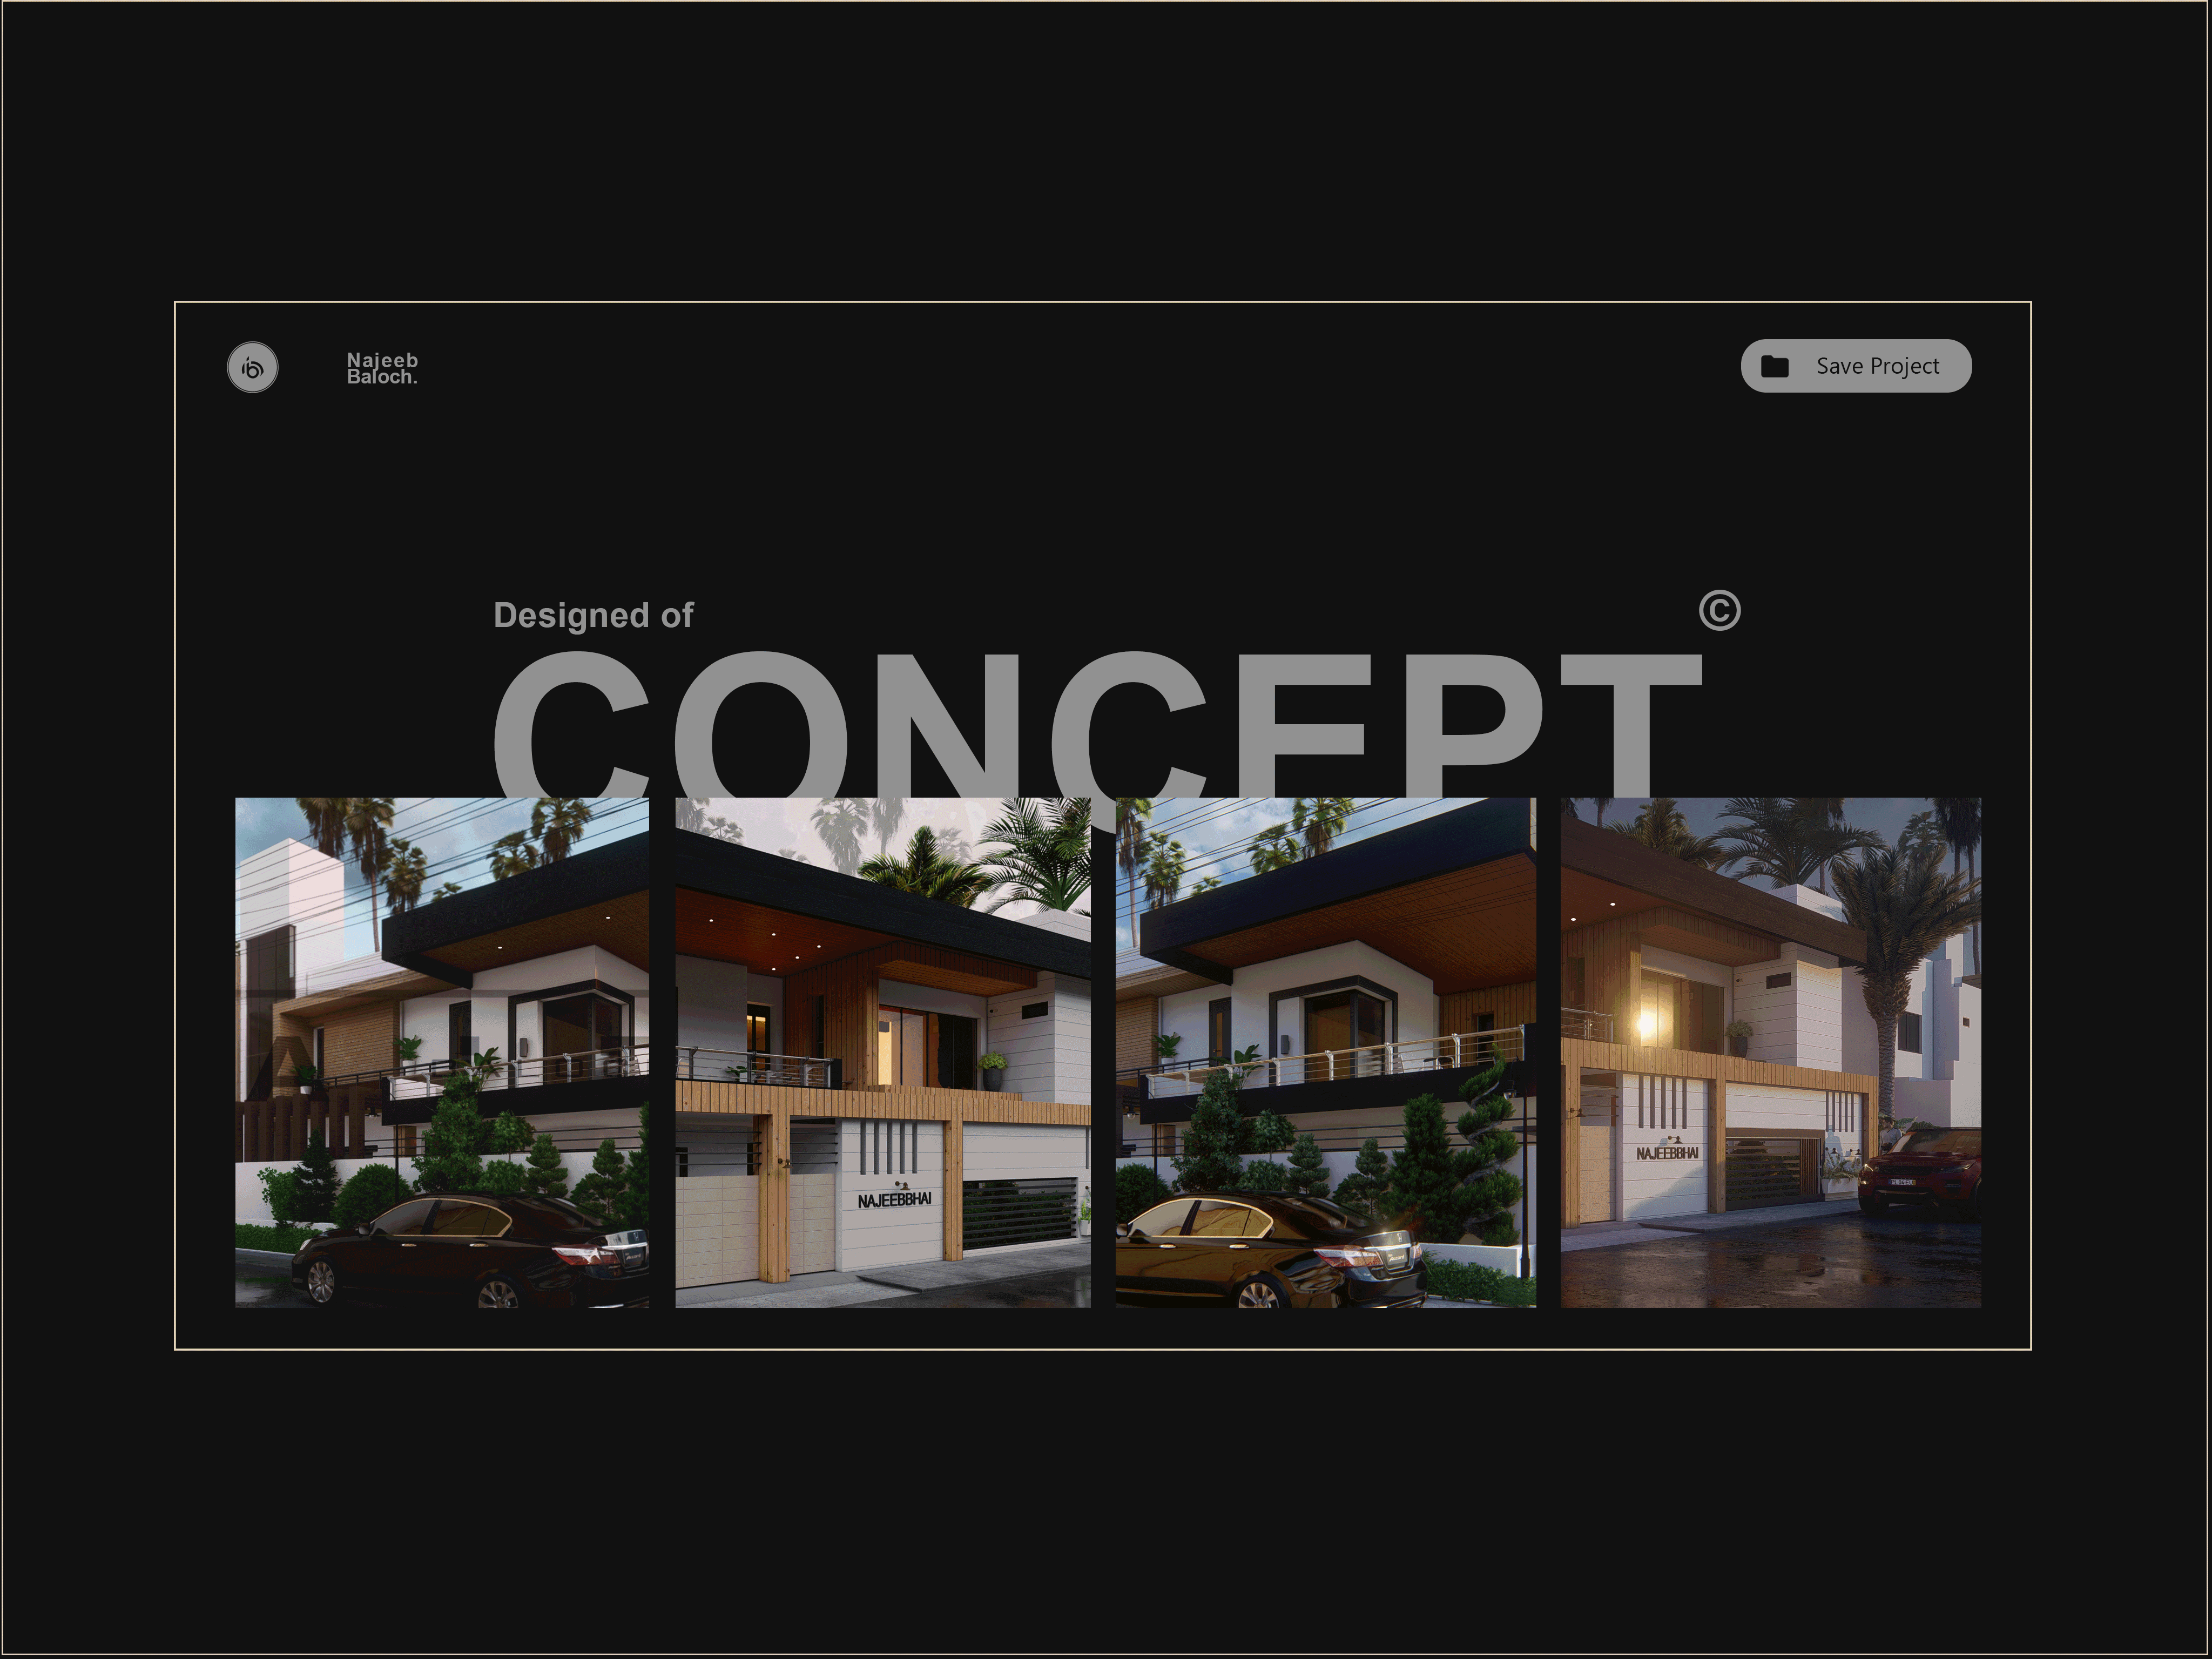 600-Sq-Yard House | Banglow Design 3d modeling 3d render 3d visualisation architectural 3d architectural design lumion